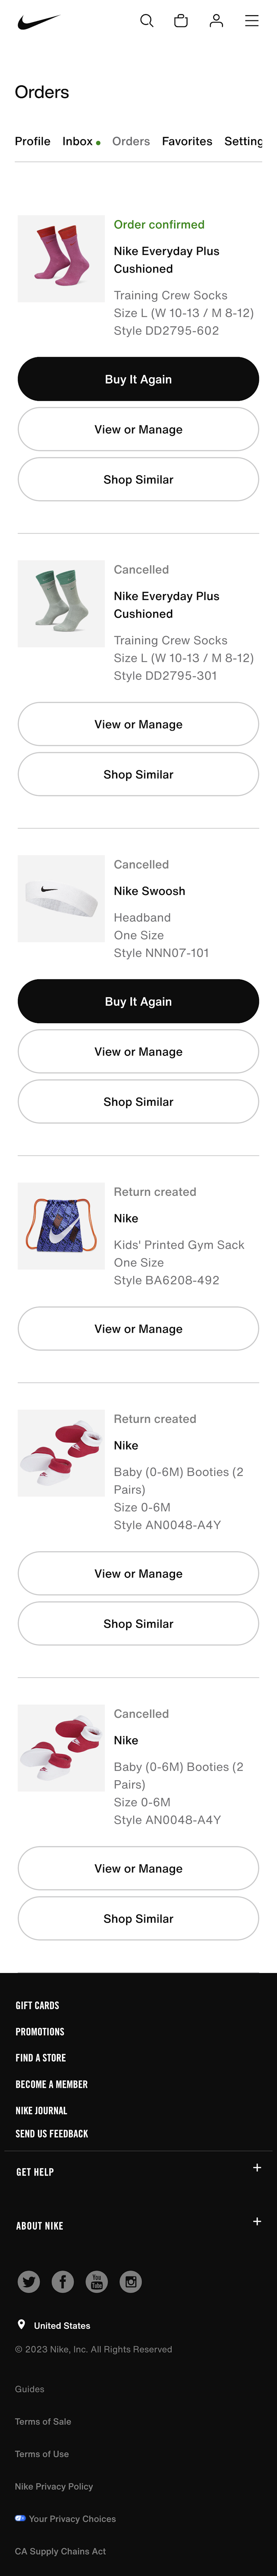 Mobile screenshot of Nike